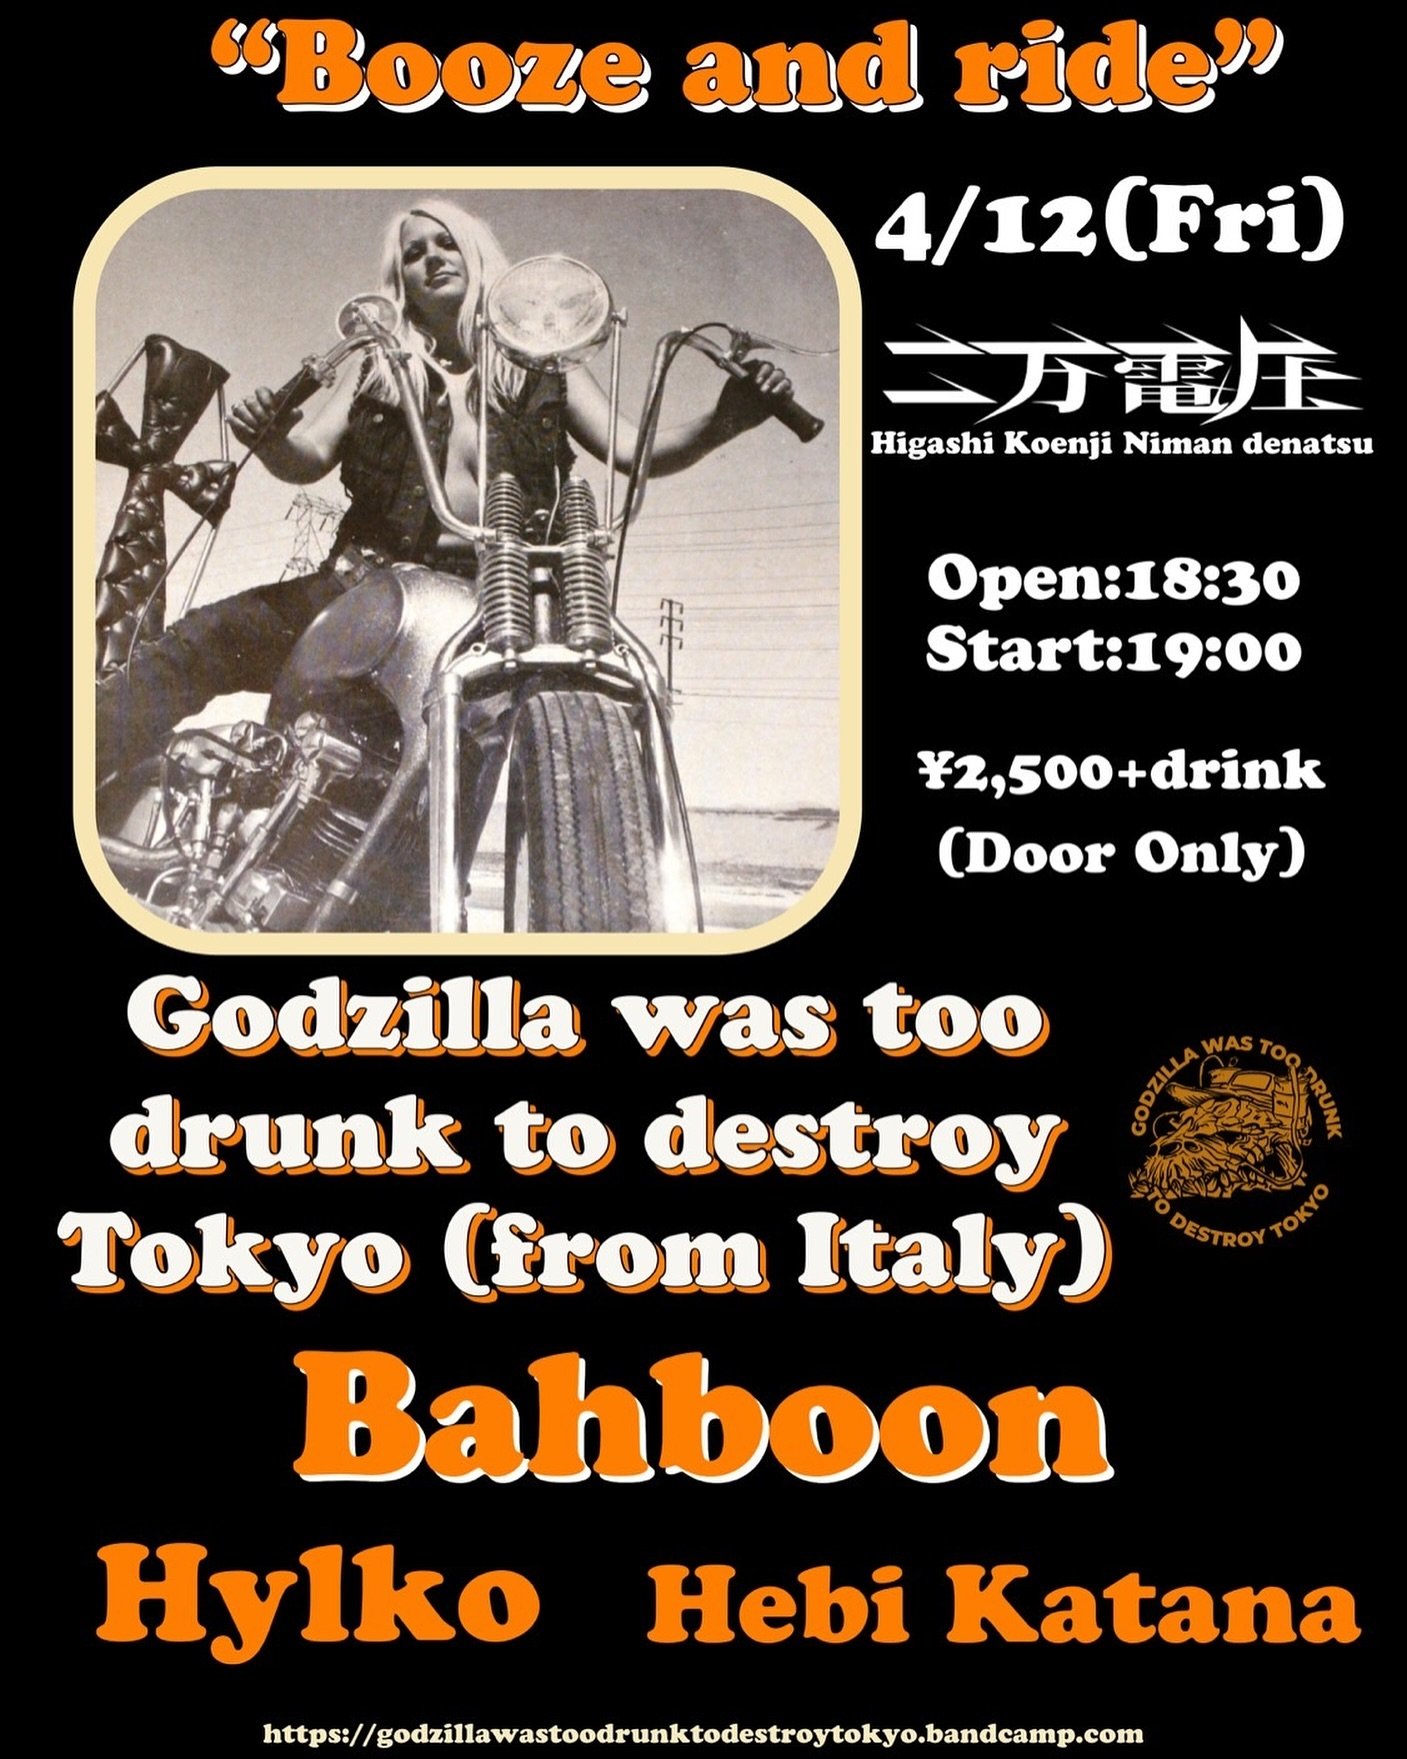 Coming up Friday at 二万電圧 in Koenji: Godzilla Was Too Drunk to Destroy Tokyo, Bahboon, Hylko, Hebi Katana.

https://open.substack.com/pub/kaalajp/p/2024-week-15?r=6wkzb&amp;utm_medium=ios

@substack @hk20000volt @hebikatana @godzilla.wtdtdt @bahboon_b